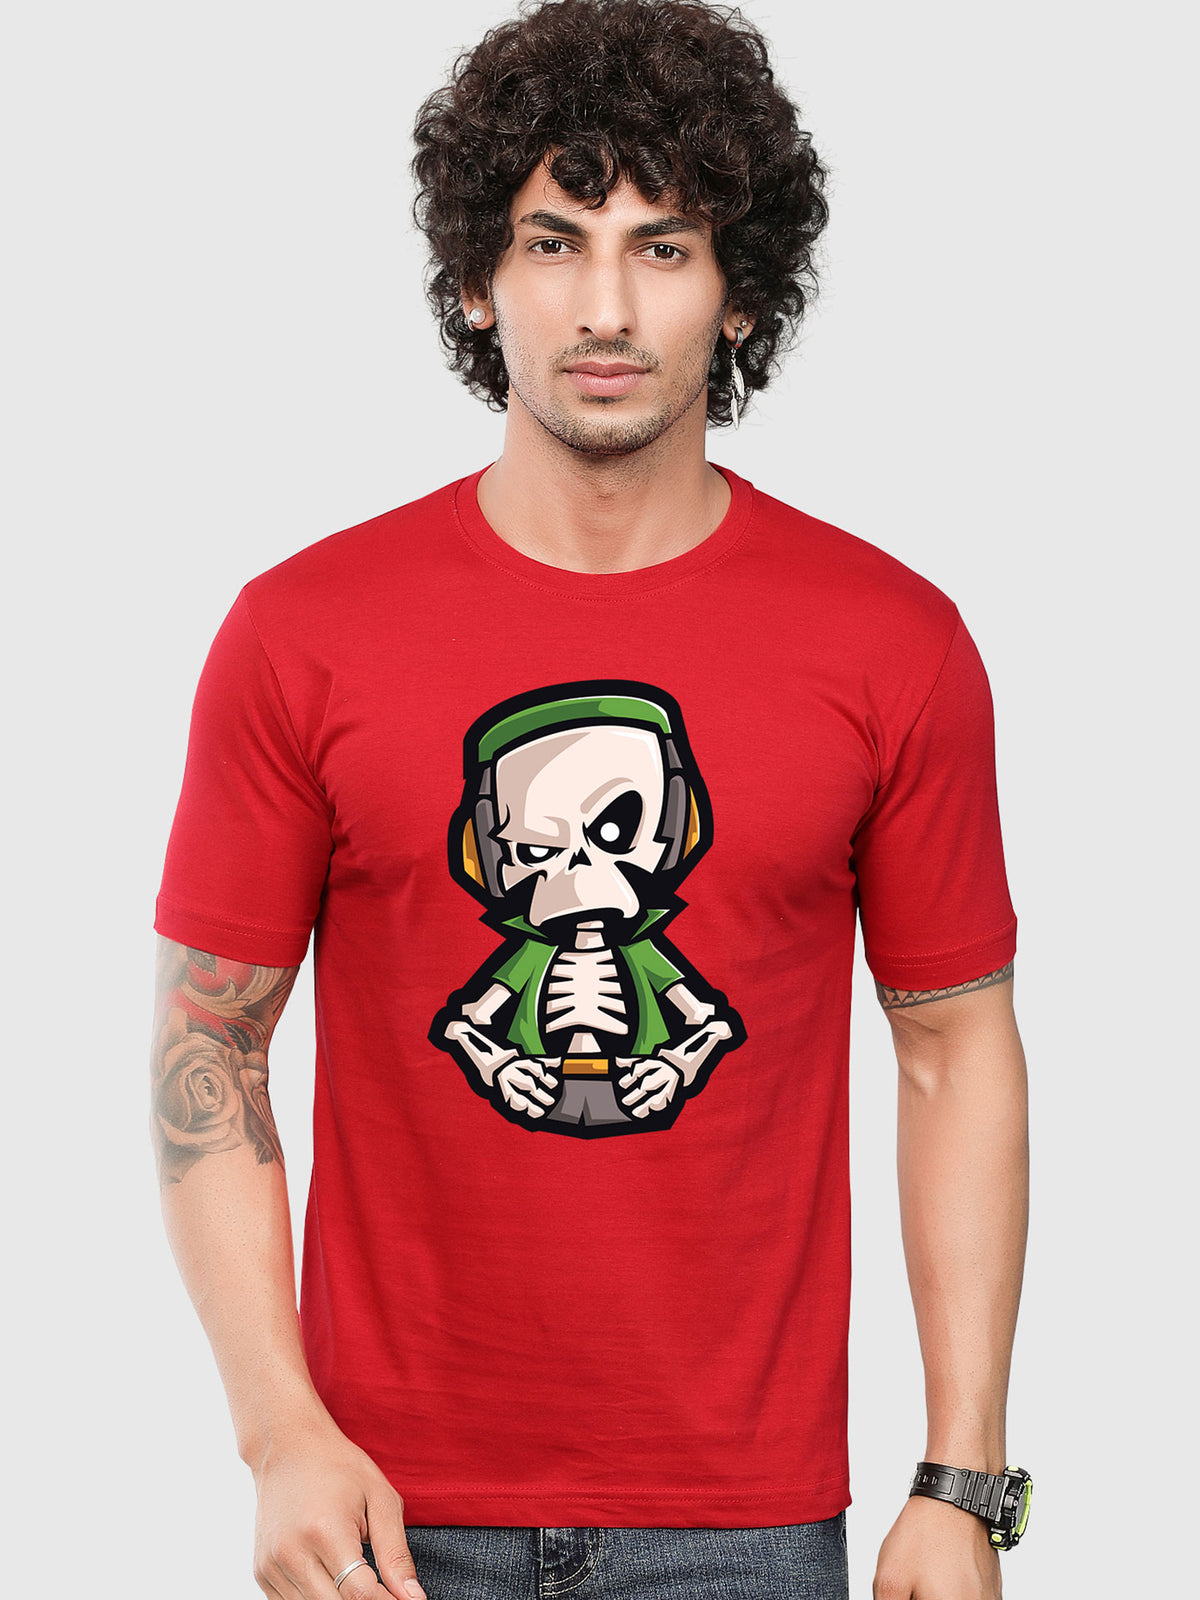 Men's Red Skull Printed T-shirt